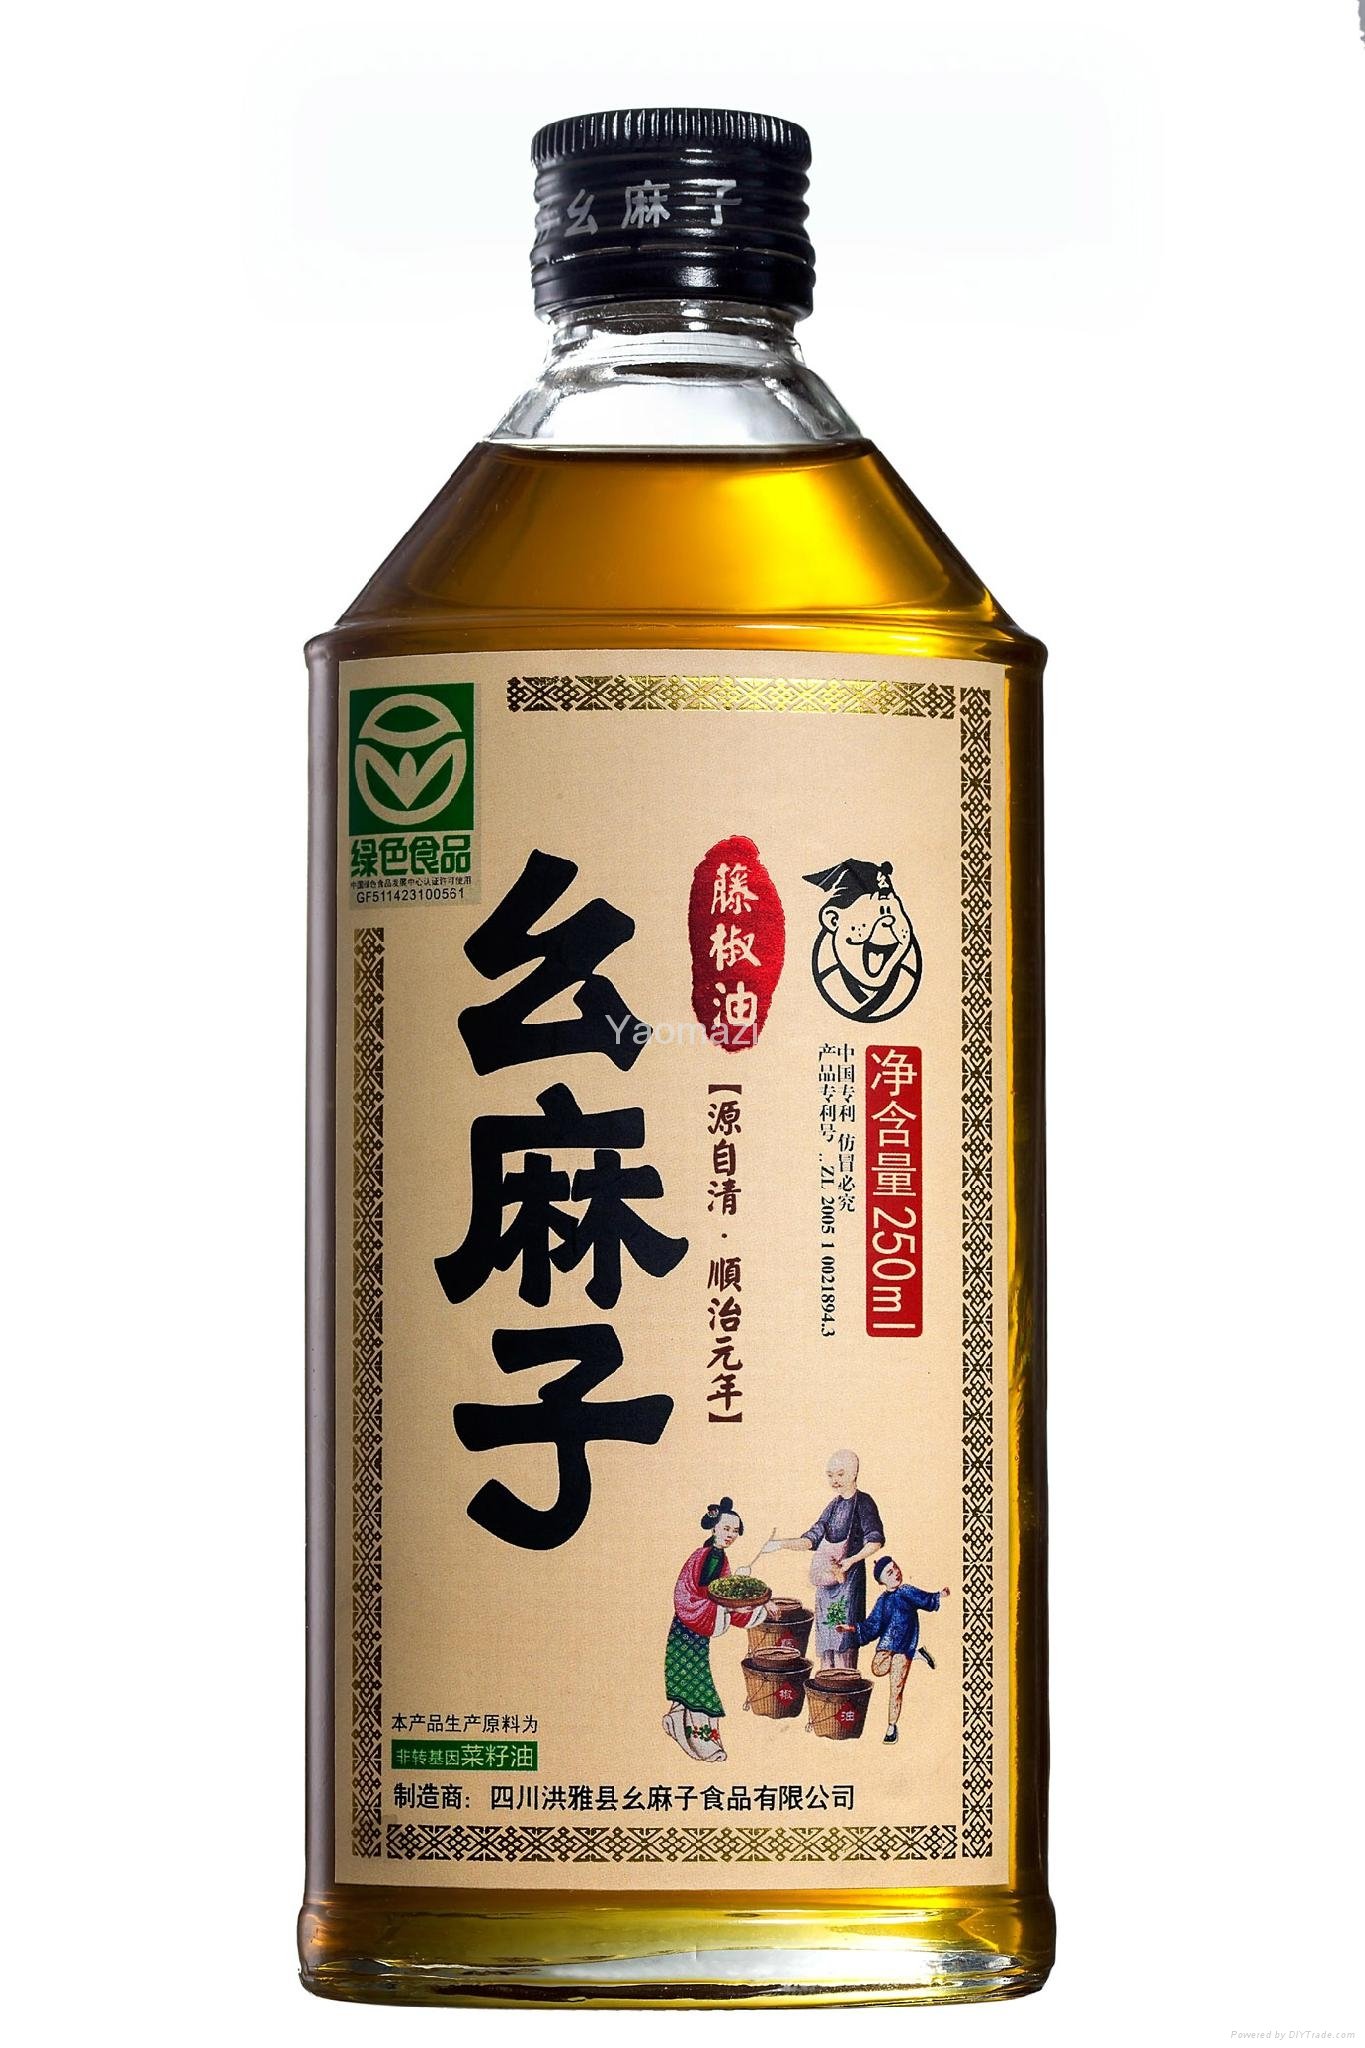 Chinese Seasoning Sichuan Peppercorn Oil